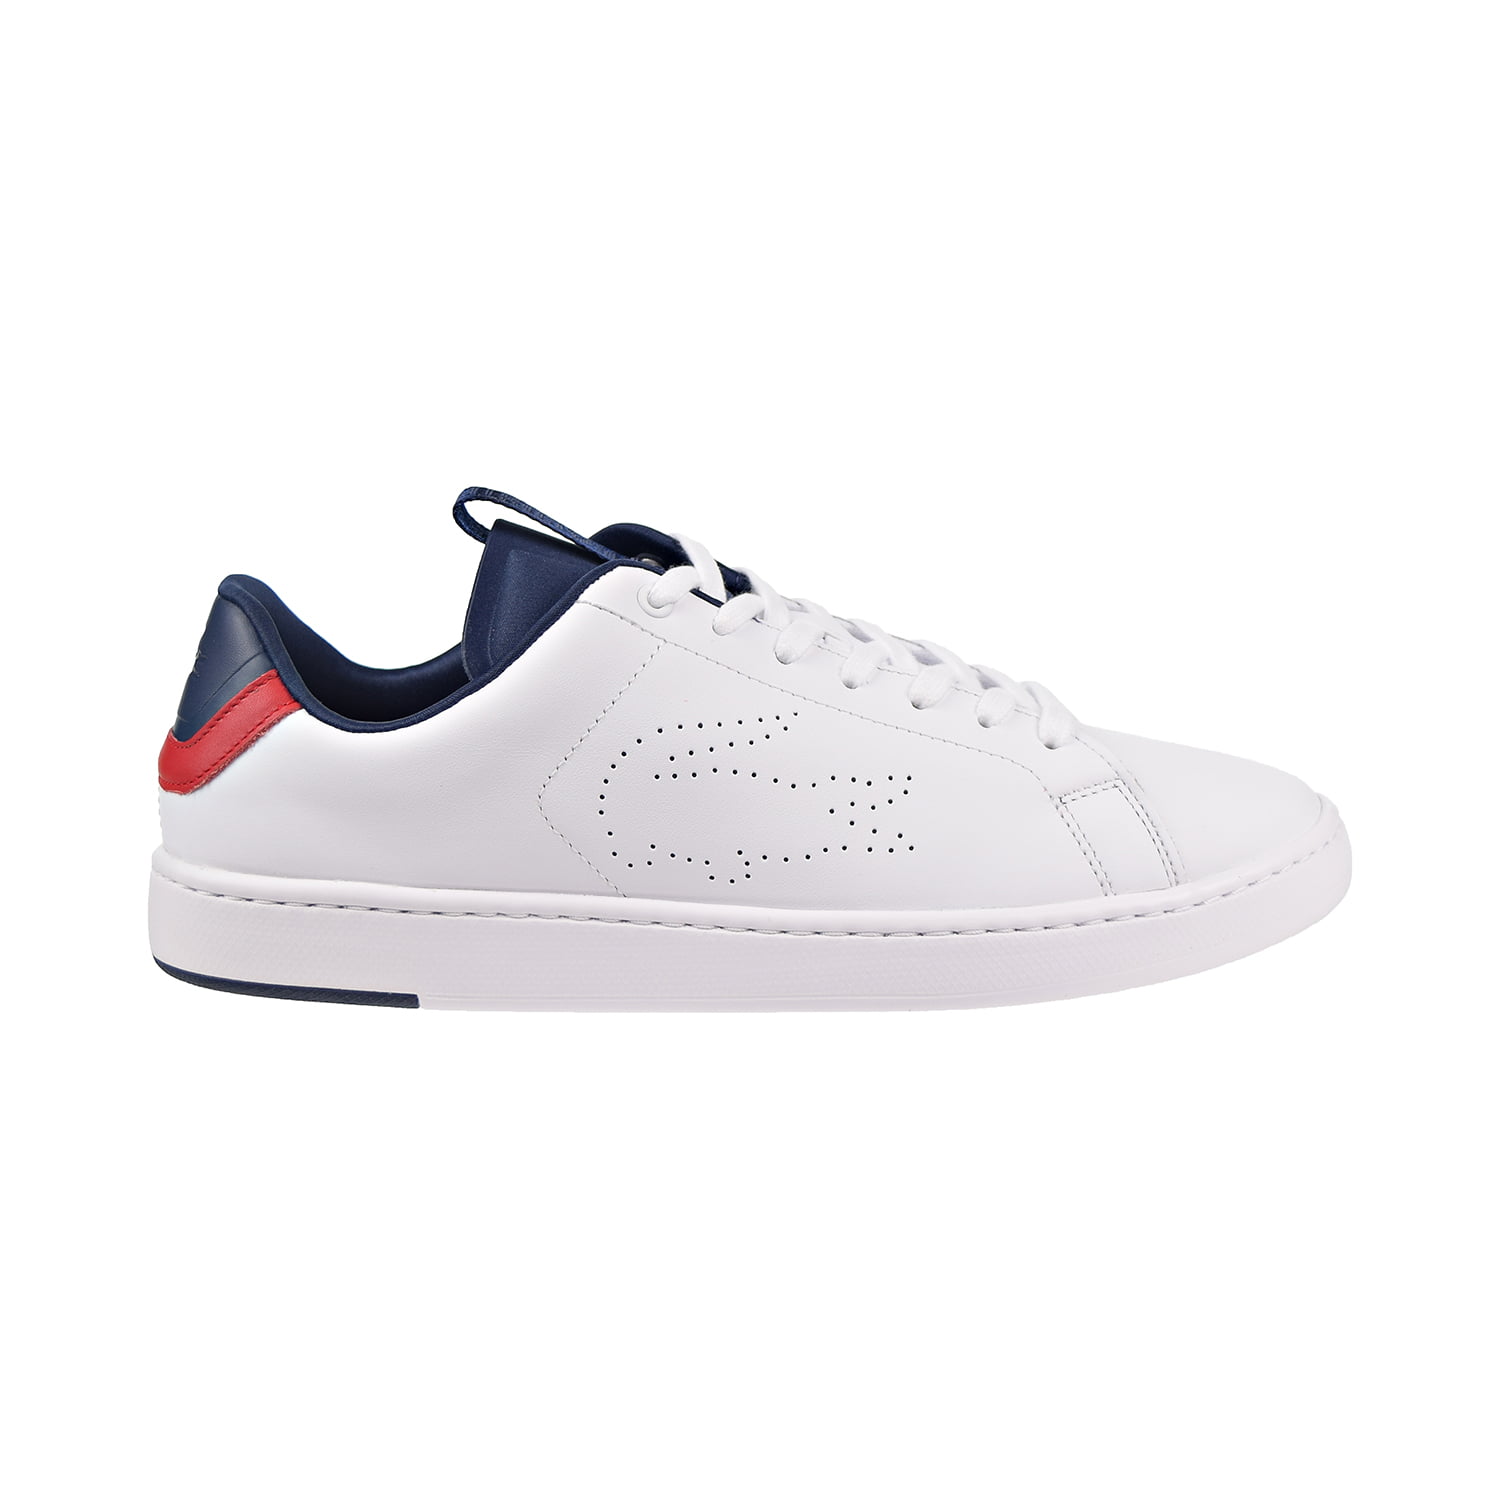 Lacoste Evo Men's Shoes White/Navy/Red 7-37sma0015-407 Walmart.com